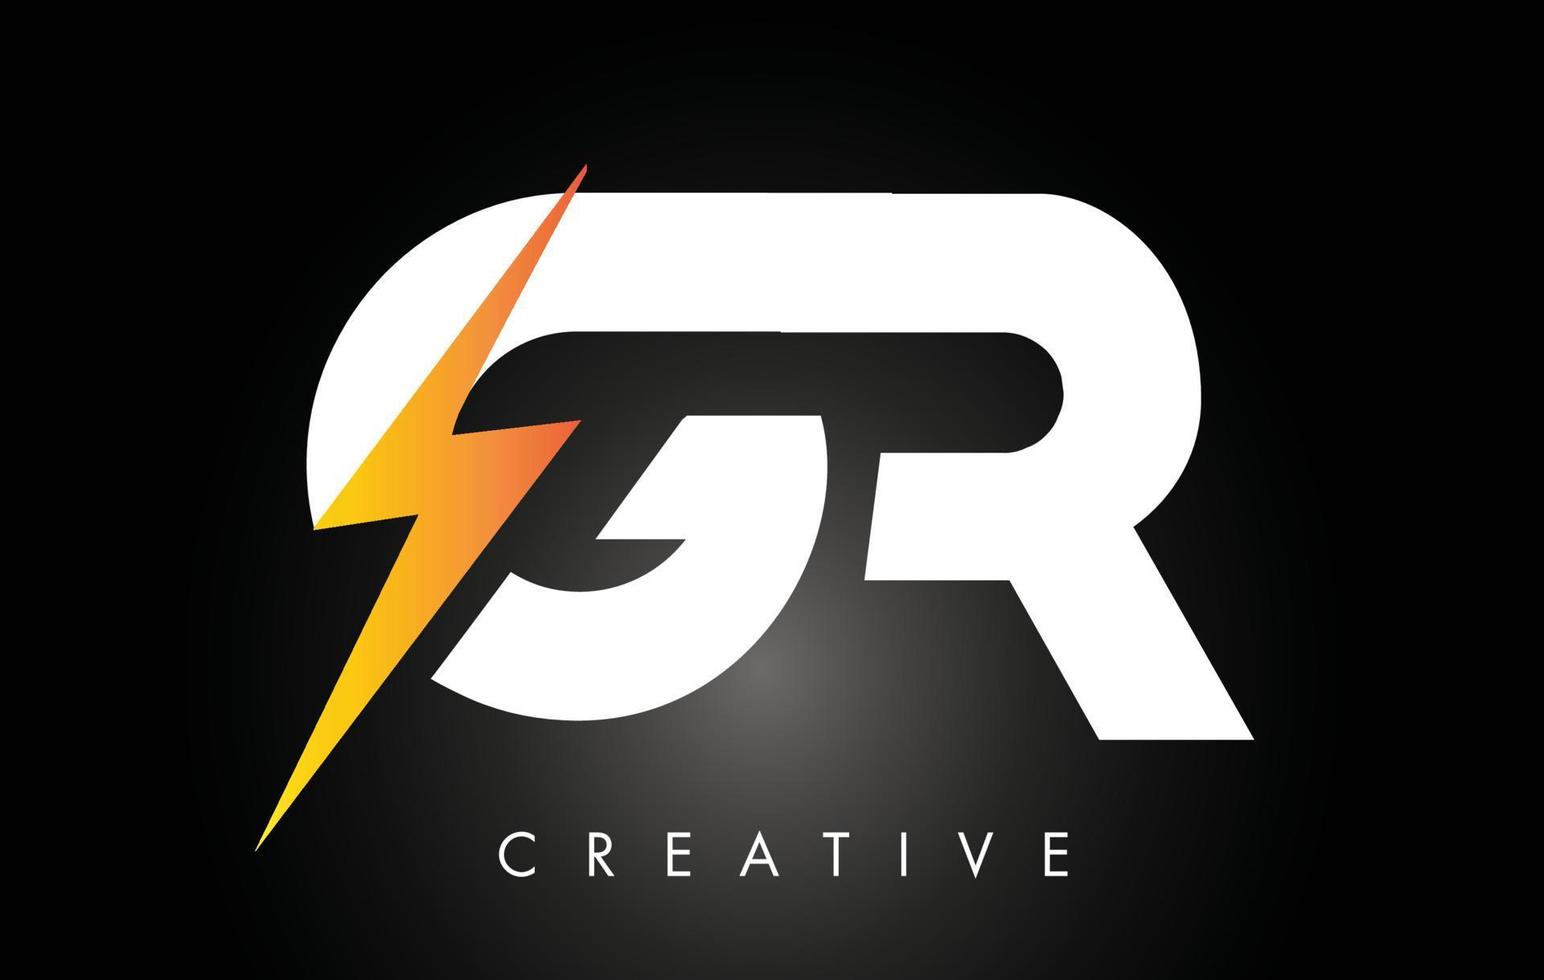 gr letter logo-ontwerp met bliksemschicht. elektrische bout letter logo vector